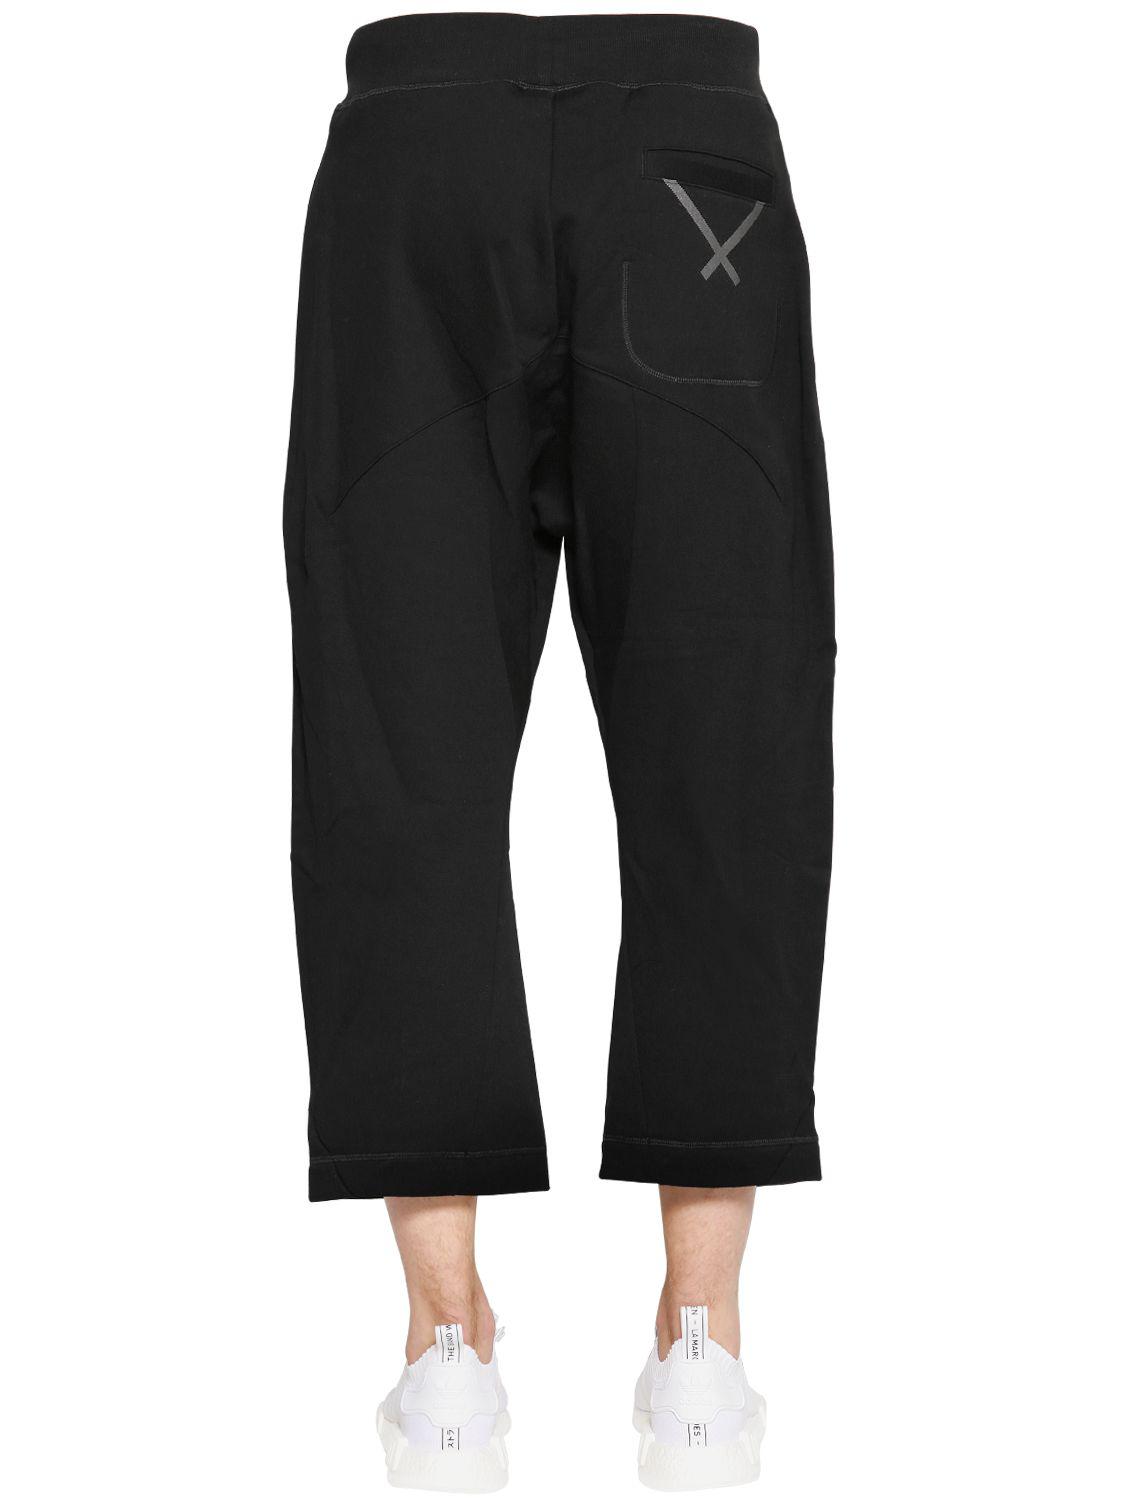 adidas Originals Xbyo 7/8 Cropped Cotton Sweatpants in Black for Men - Lyst